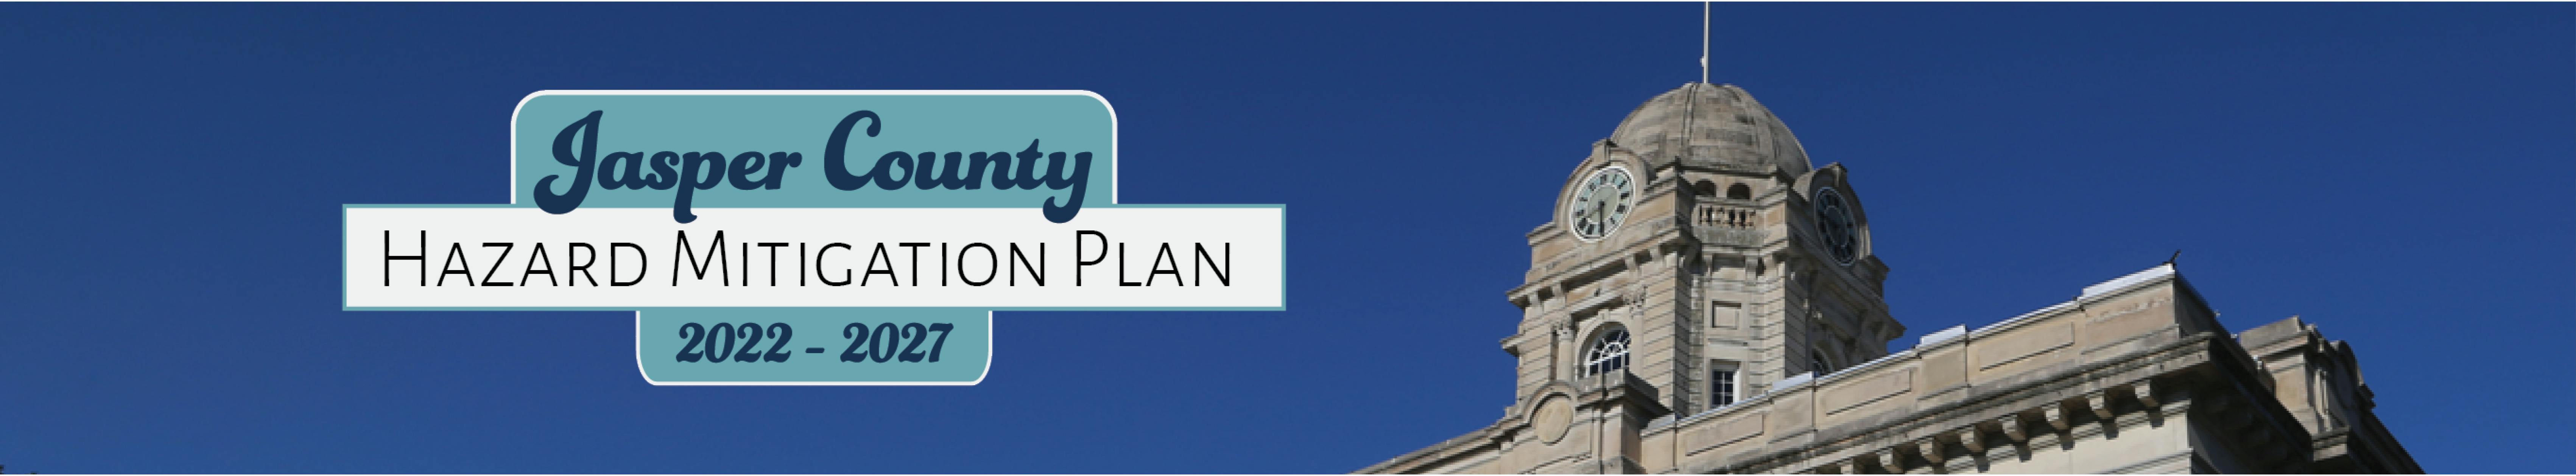 Jasper County Hazard Mitigation Plan logo overlaid on a photo of the Jasper County courthouse.